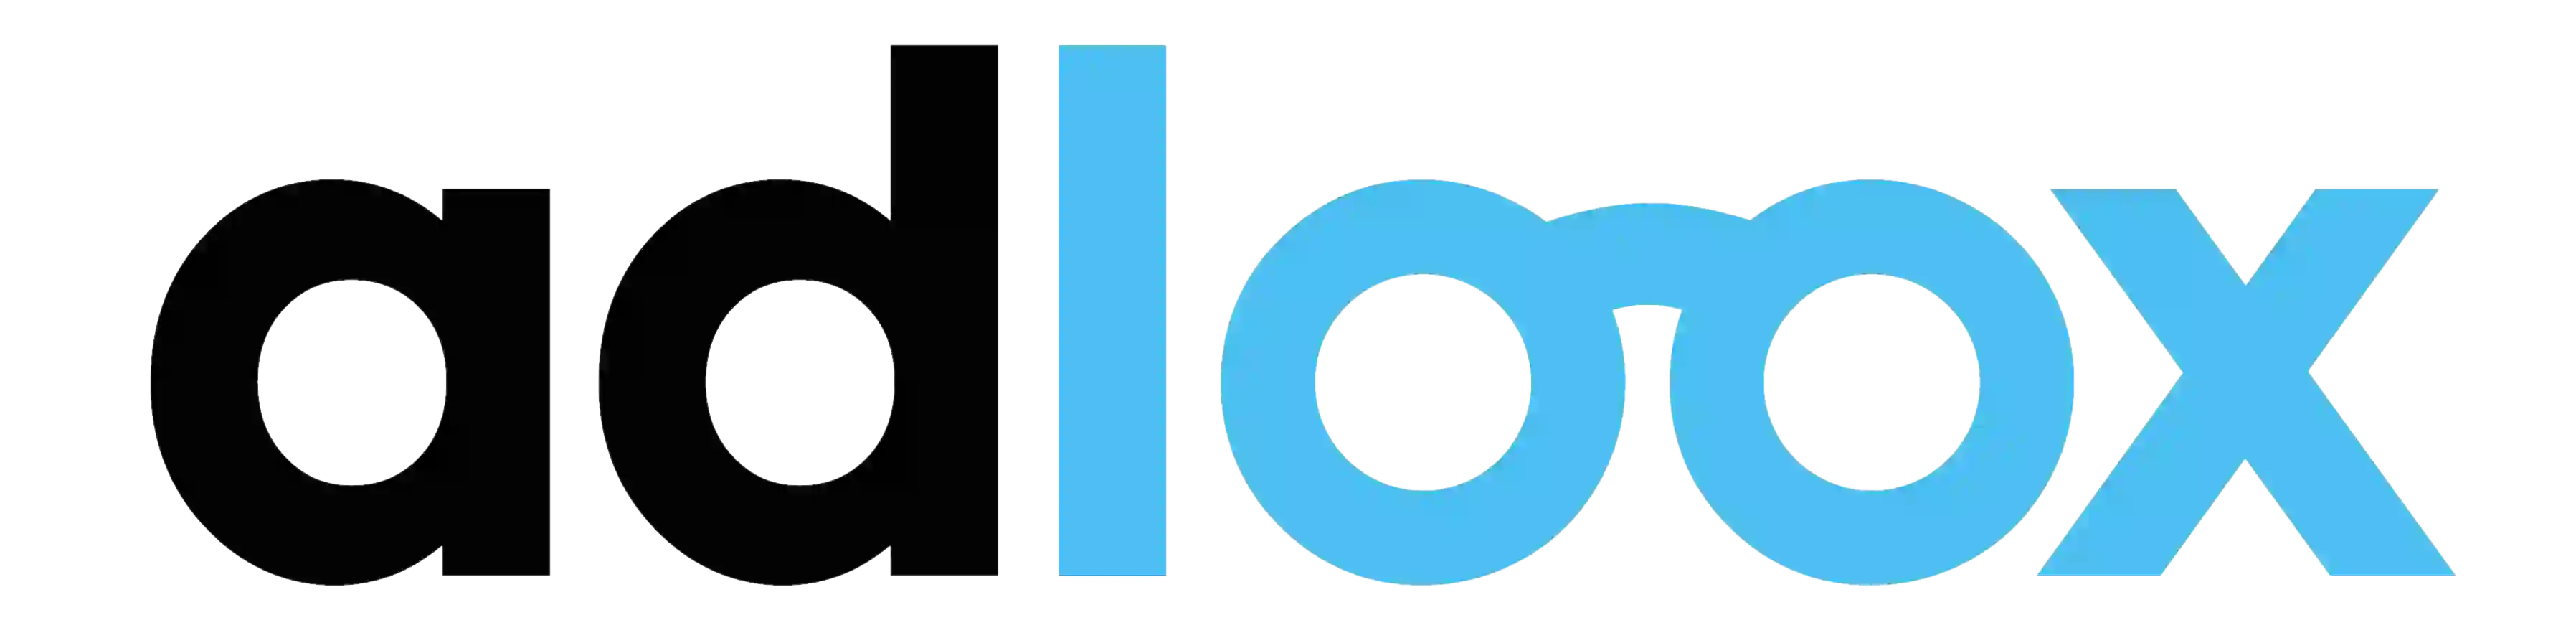 Logo_Adloox-HiRes-Crop